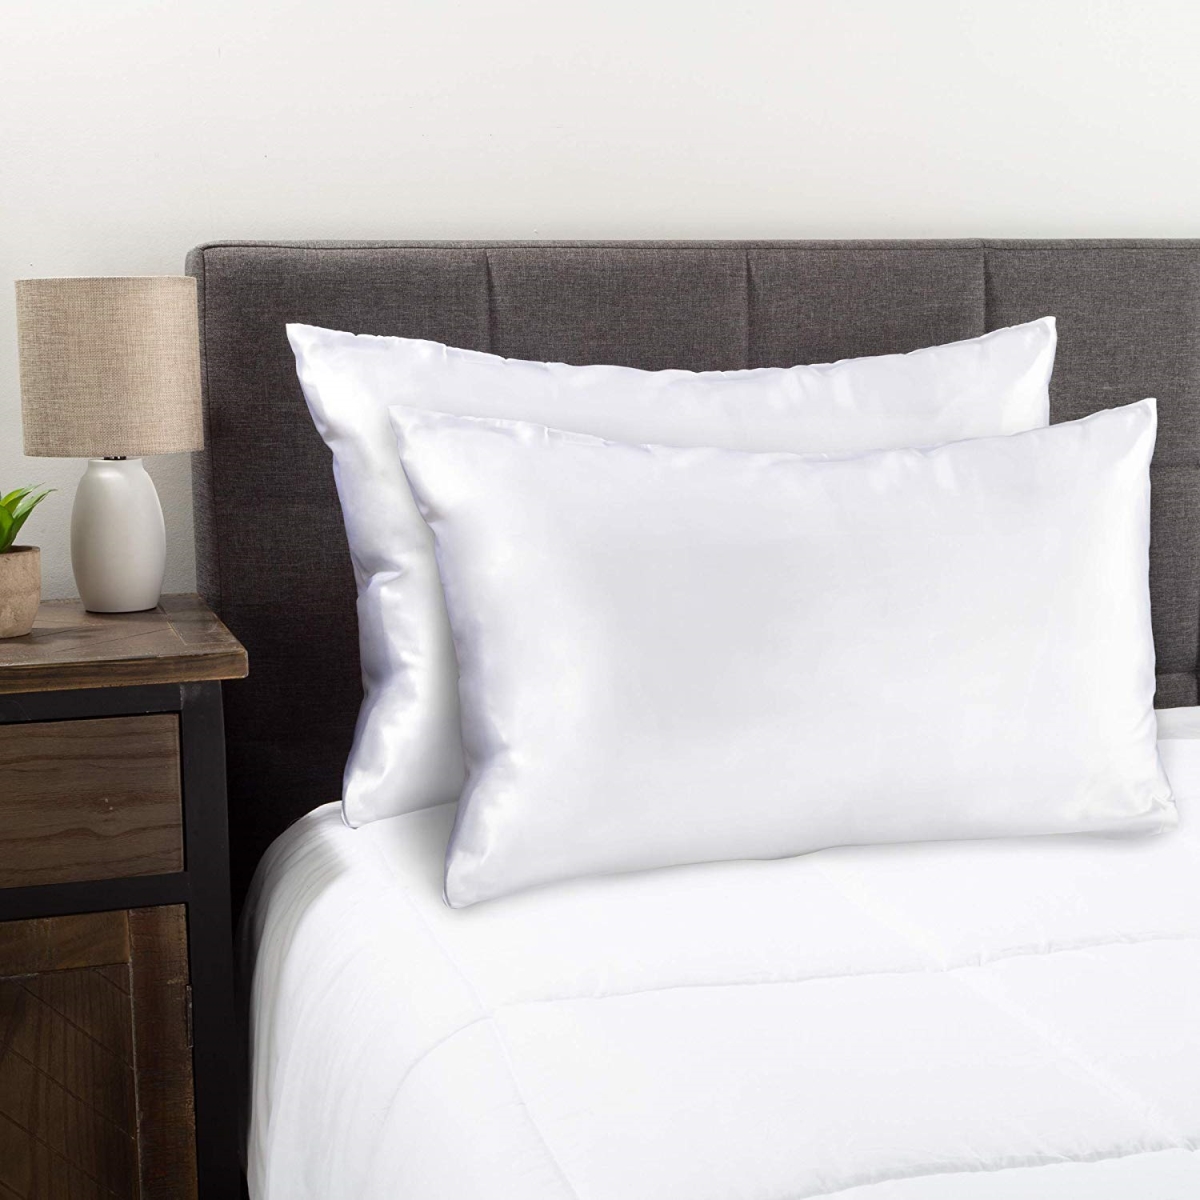 66a-75787 Satin Microfiber Pillowcases For Hair & Skin Standard Size Pillow, White - Set Of 2